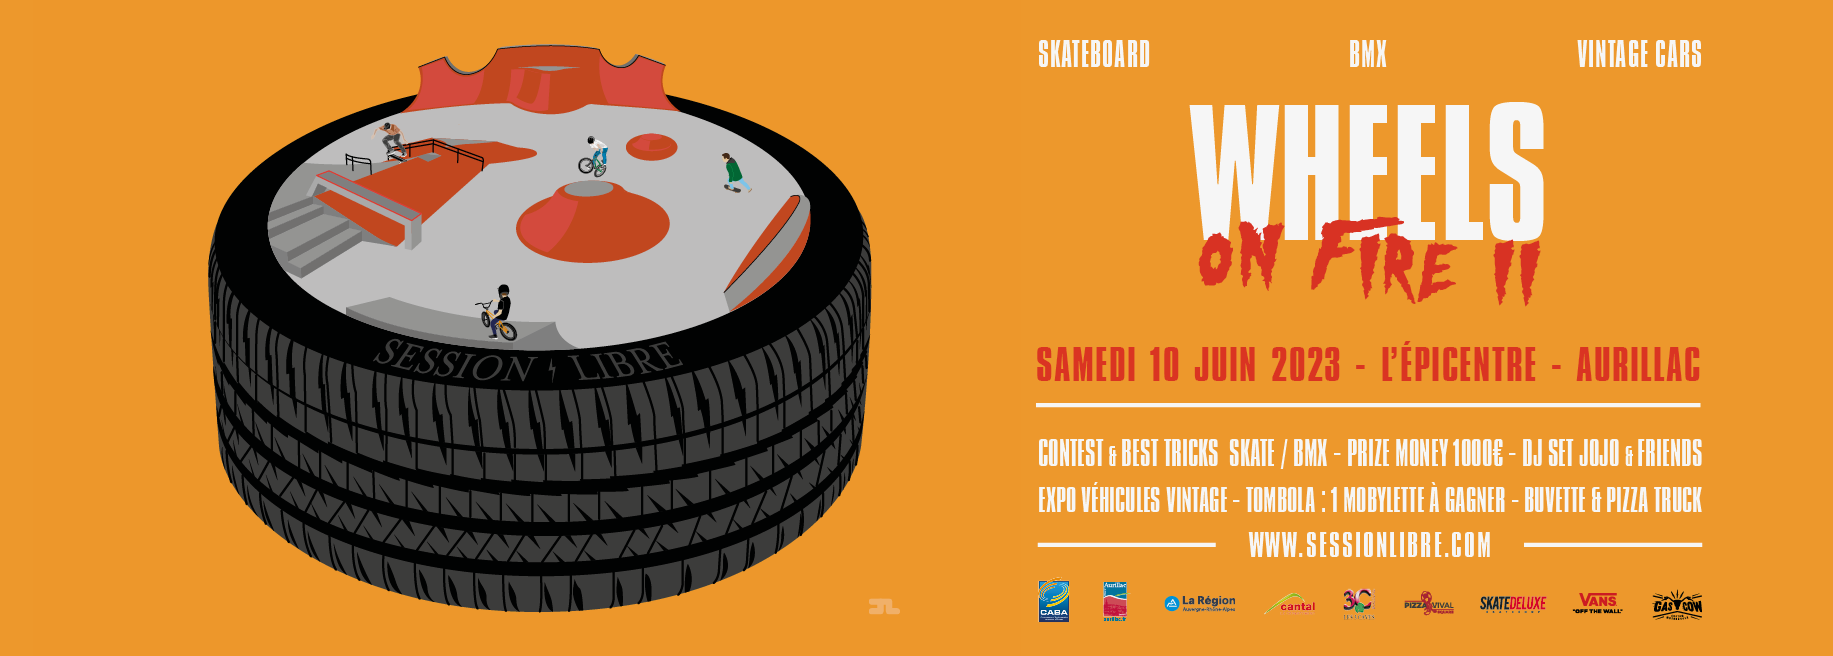 WHEELS ON FIRE II (Skate / BMX / Vintage Cars) – Samedi 10 juin 2023